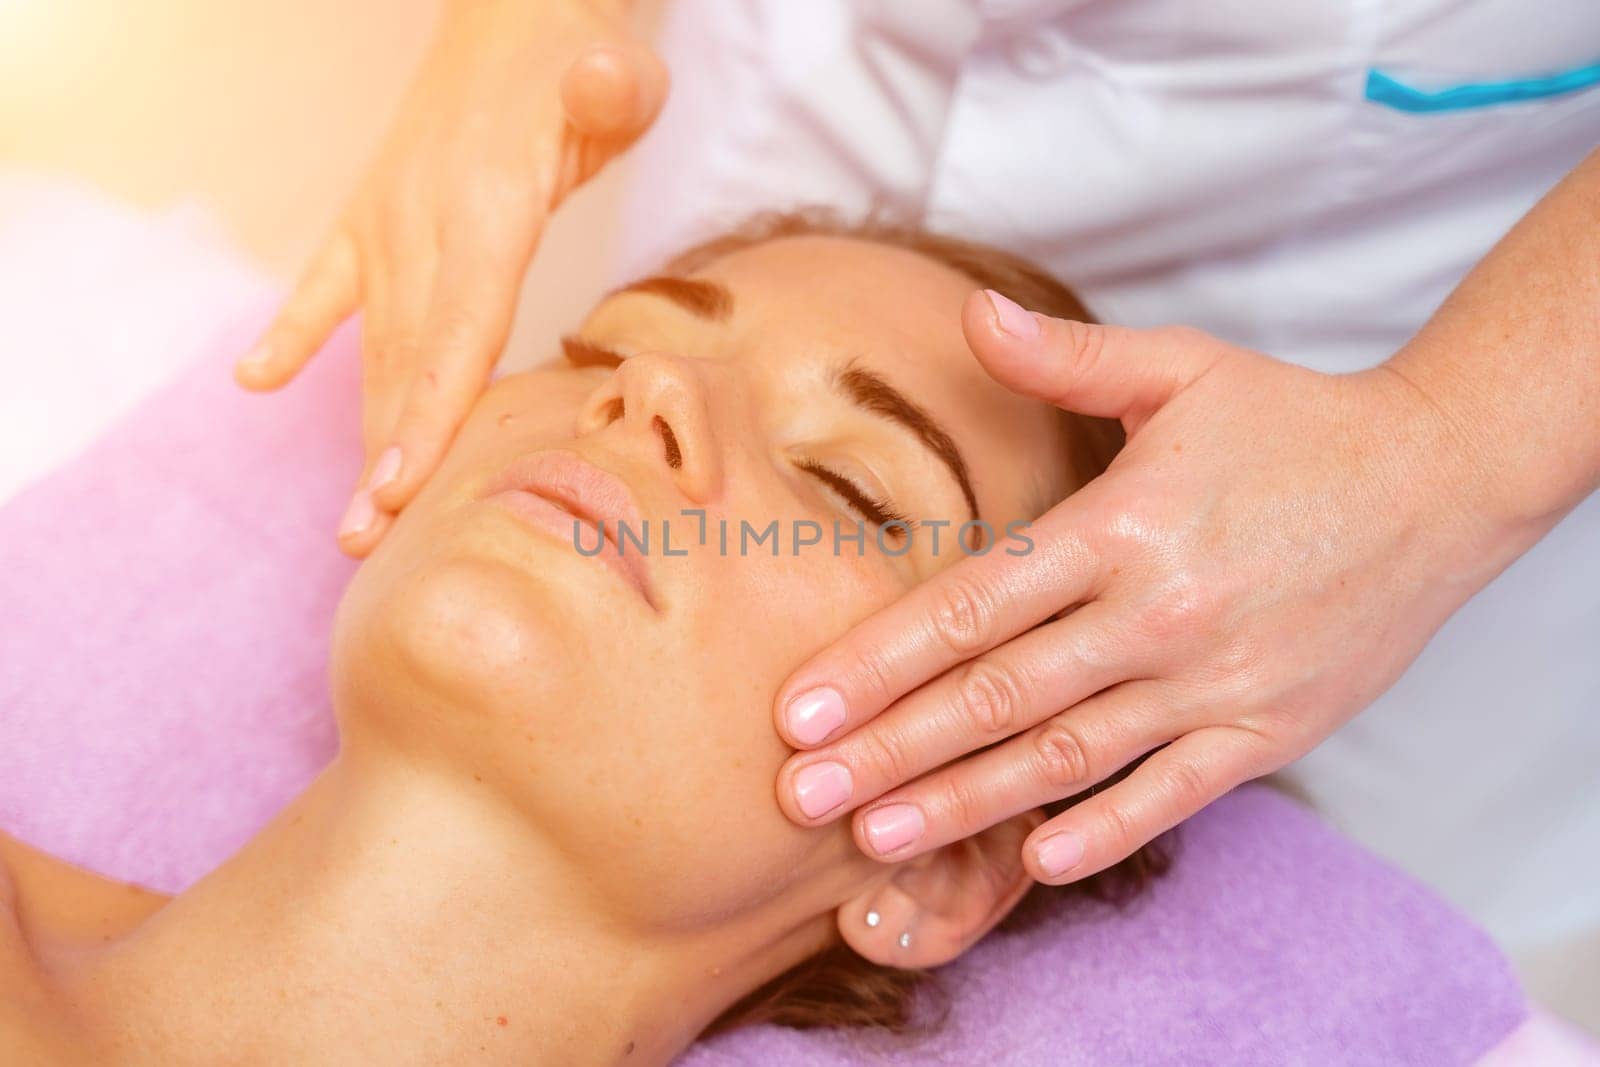 Relaxing massage. European woman getting facial massage in spa salon, side view by Matiunina